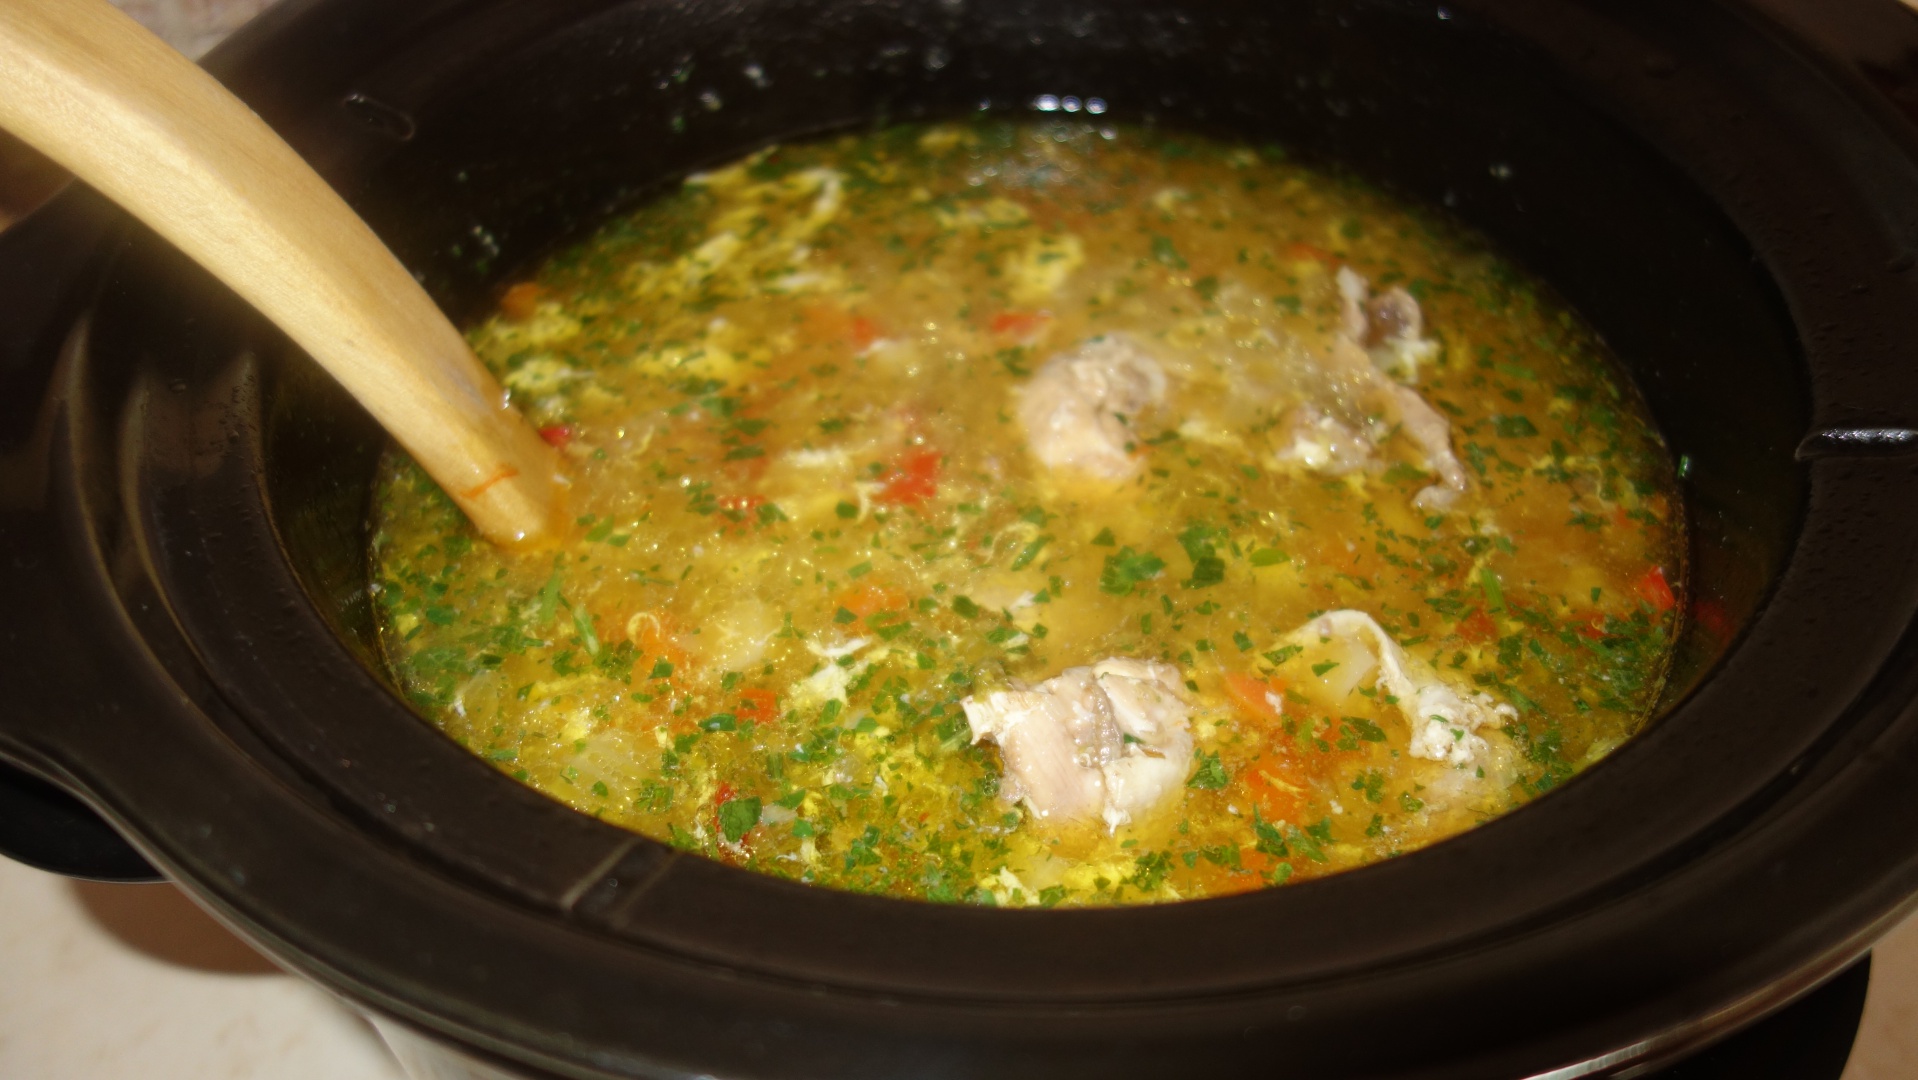 Supa de pui cu legume dreasa cu ou gatita la Crock Pot Digital 4.7l